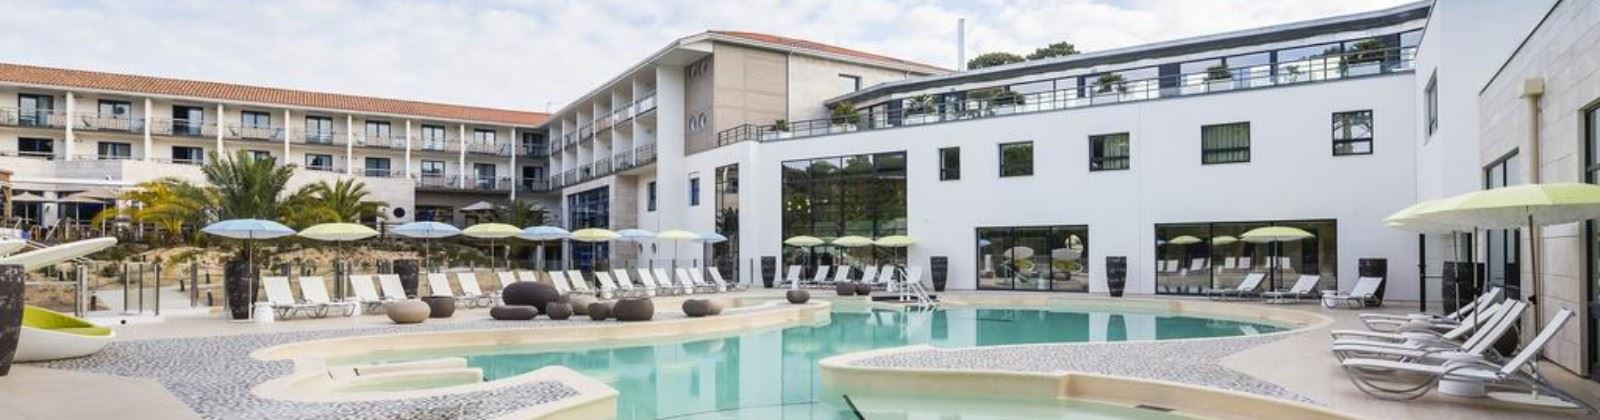 les bains d arguin olevene restaurant hotel seminaires booking convention 